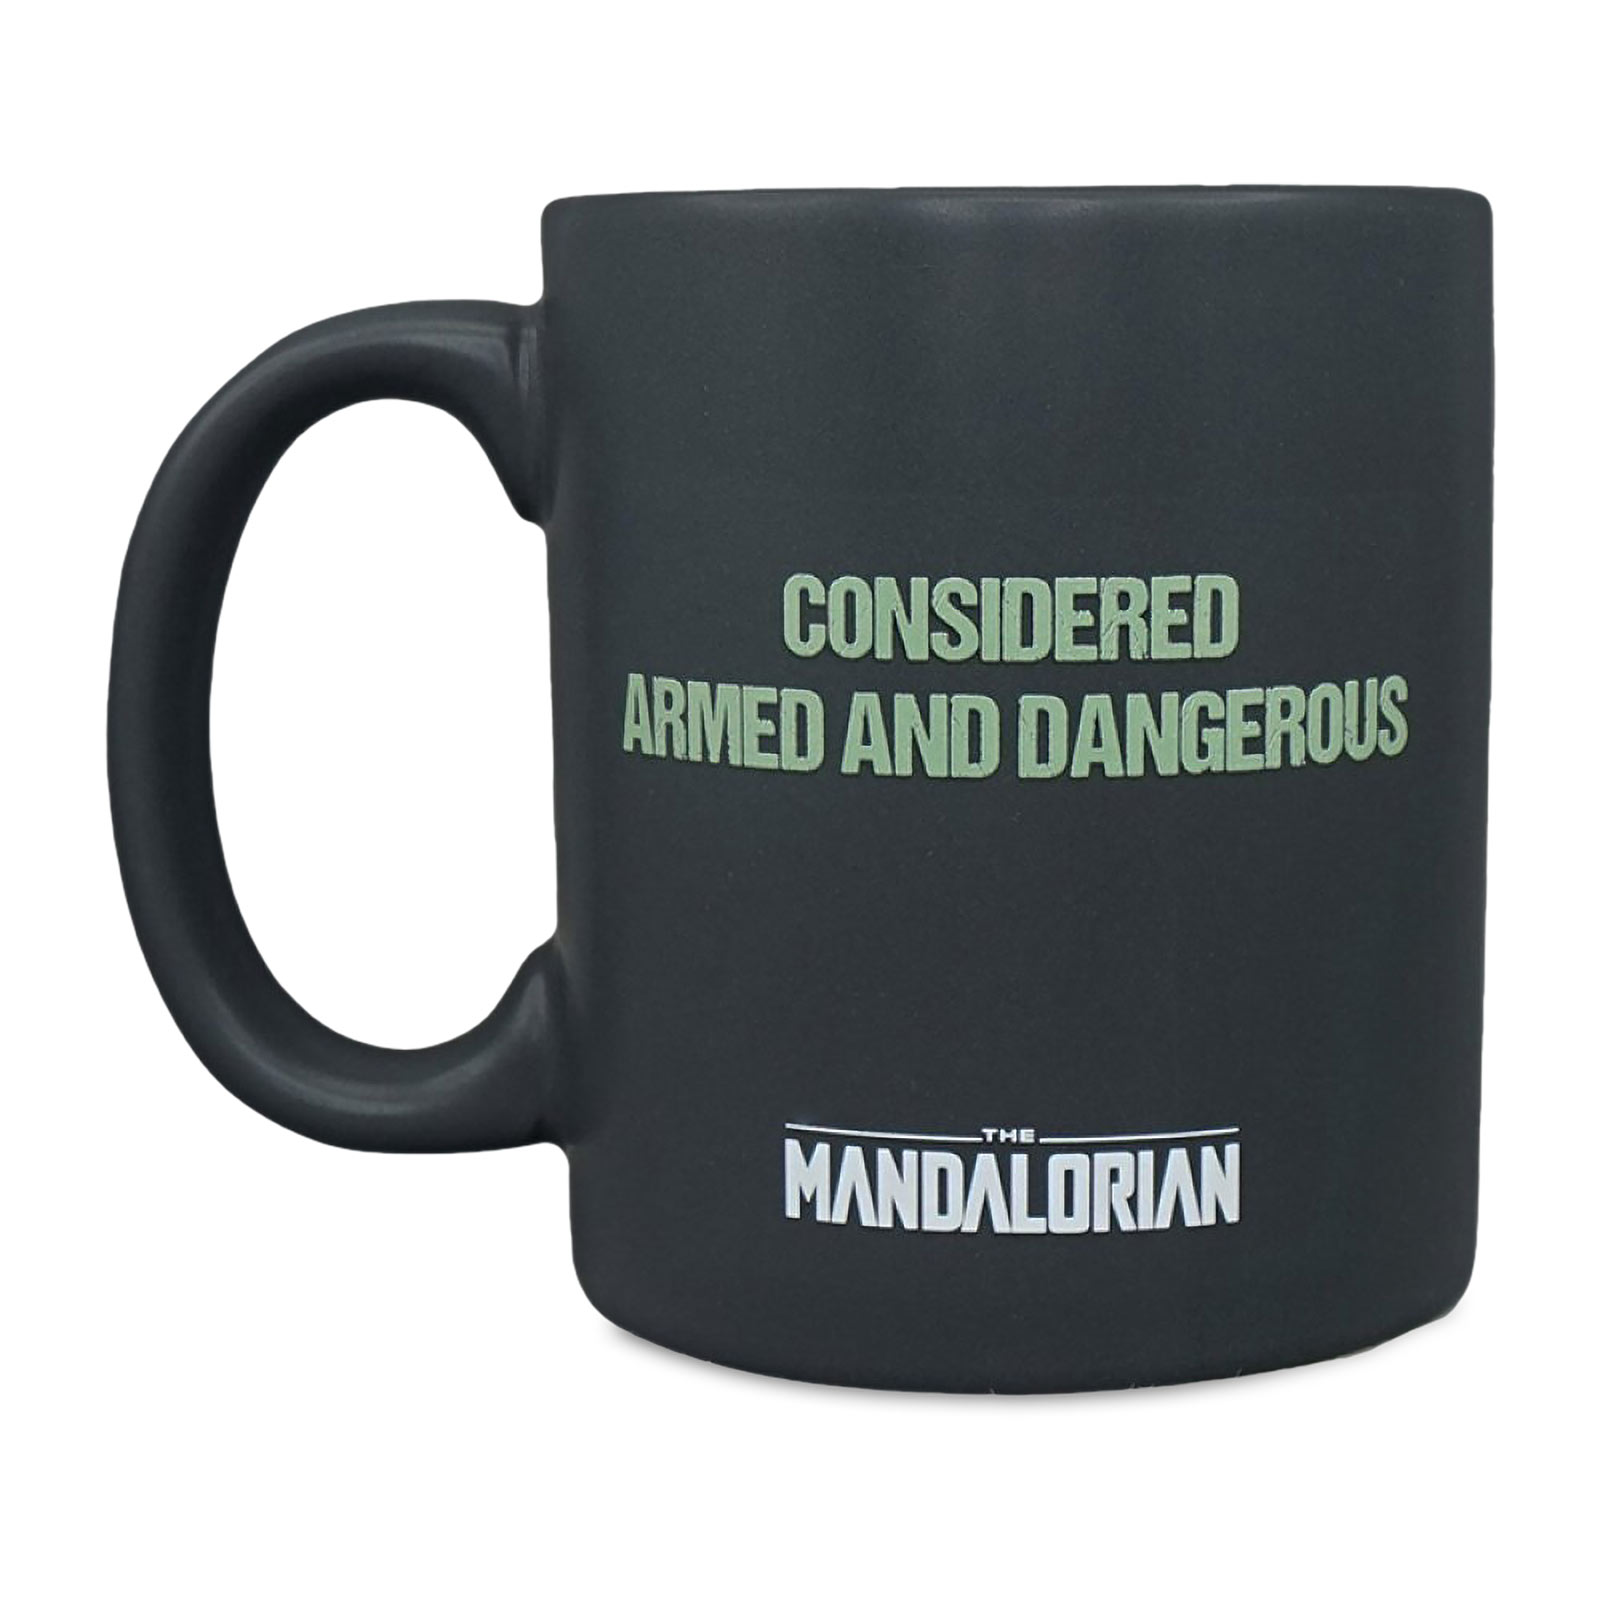 The Child Armed and Dangerous Mug - Star Wars The Mandalorian